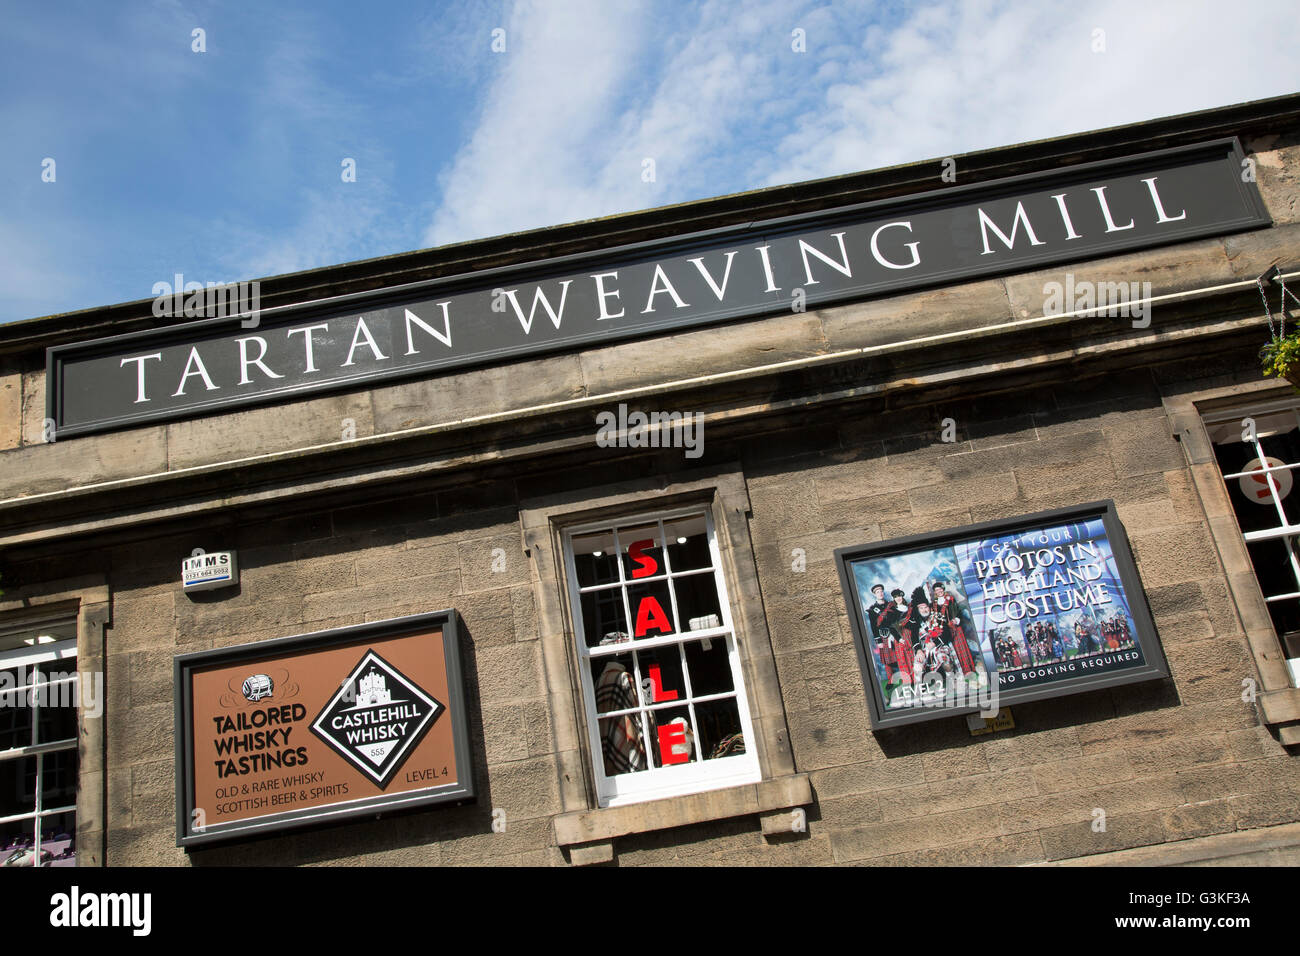 Castlehill Tartan Weaving Mill Sign, Edinburgh, Scotland Stock Photo